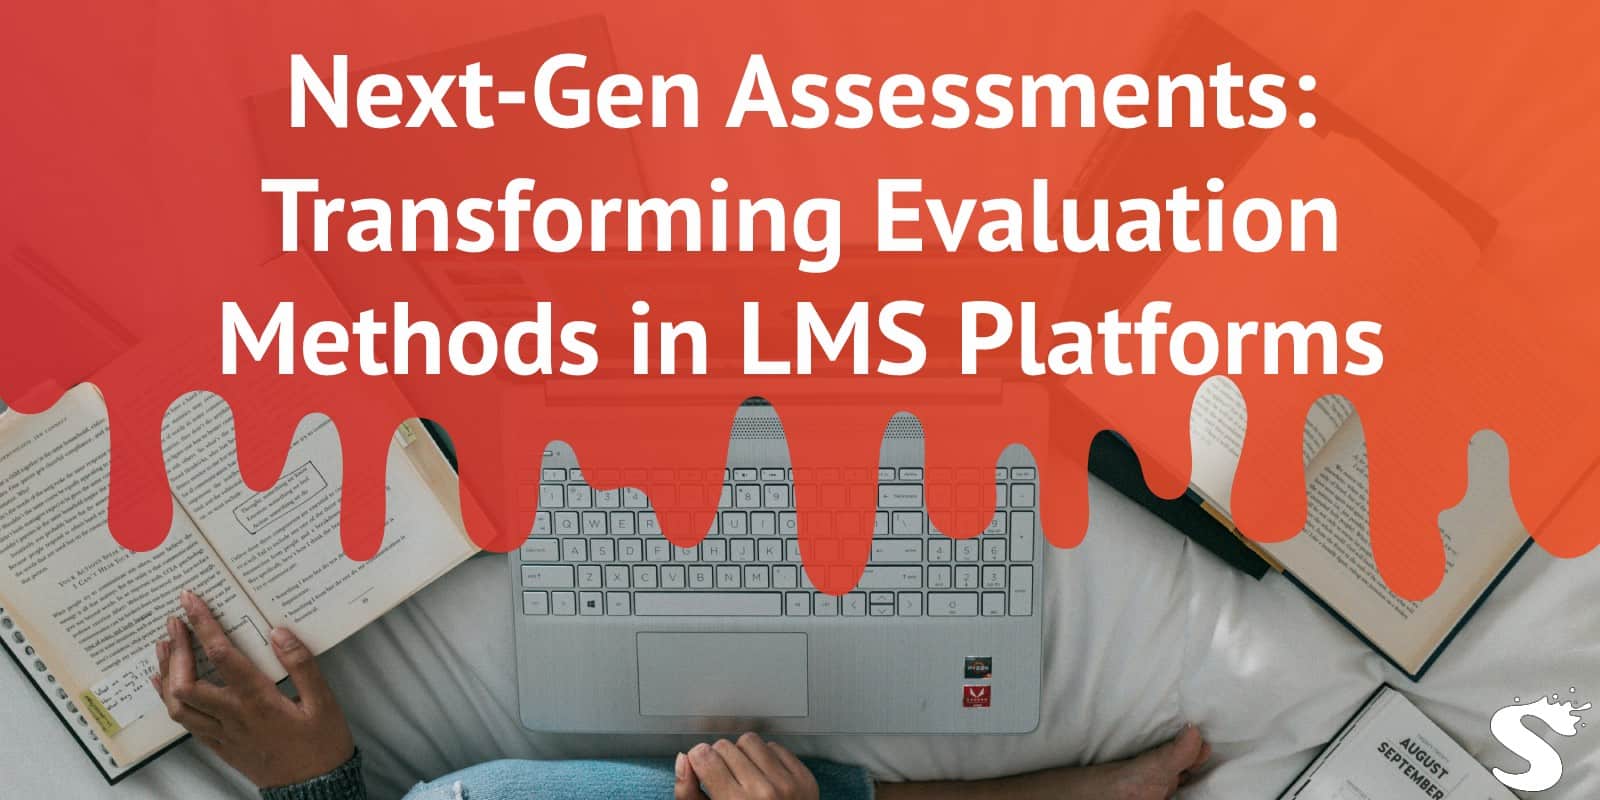 Next-Gen Assessments: Transforming Evaluation Methods in LMS Platforms